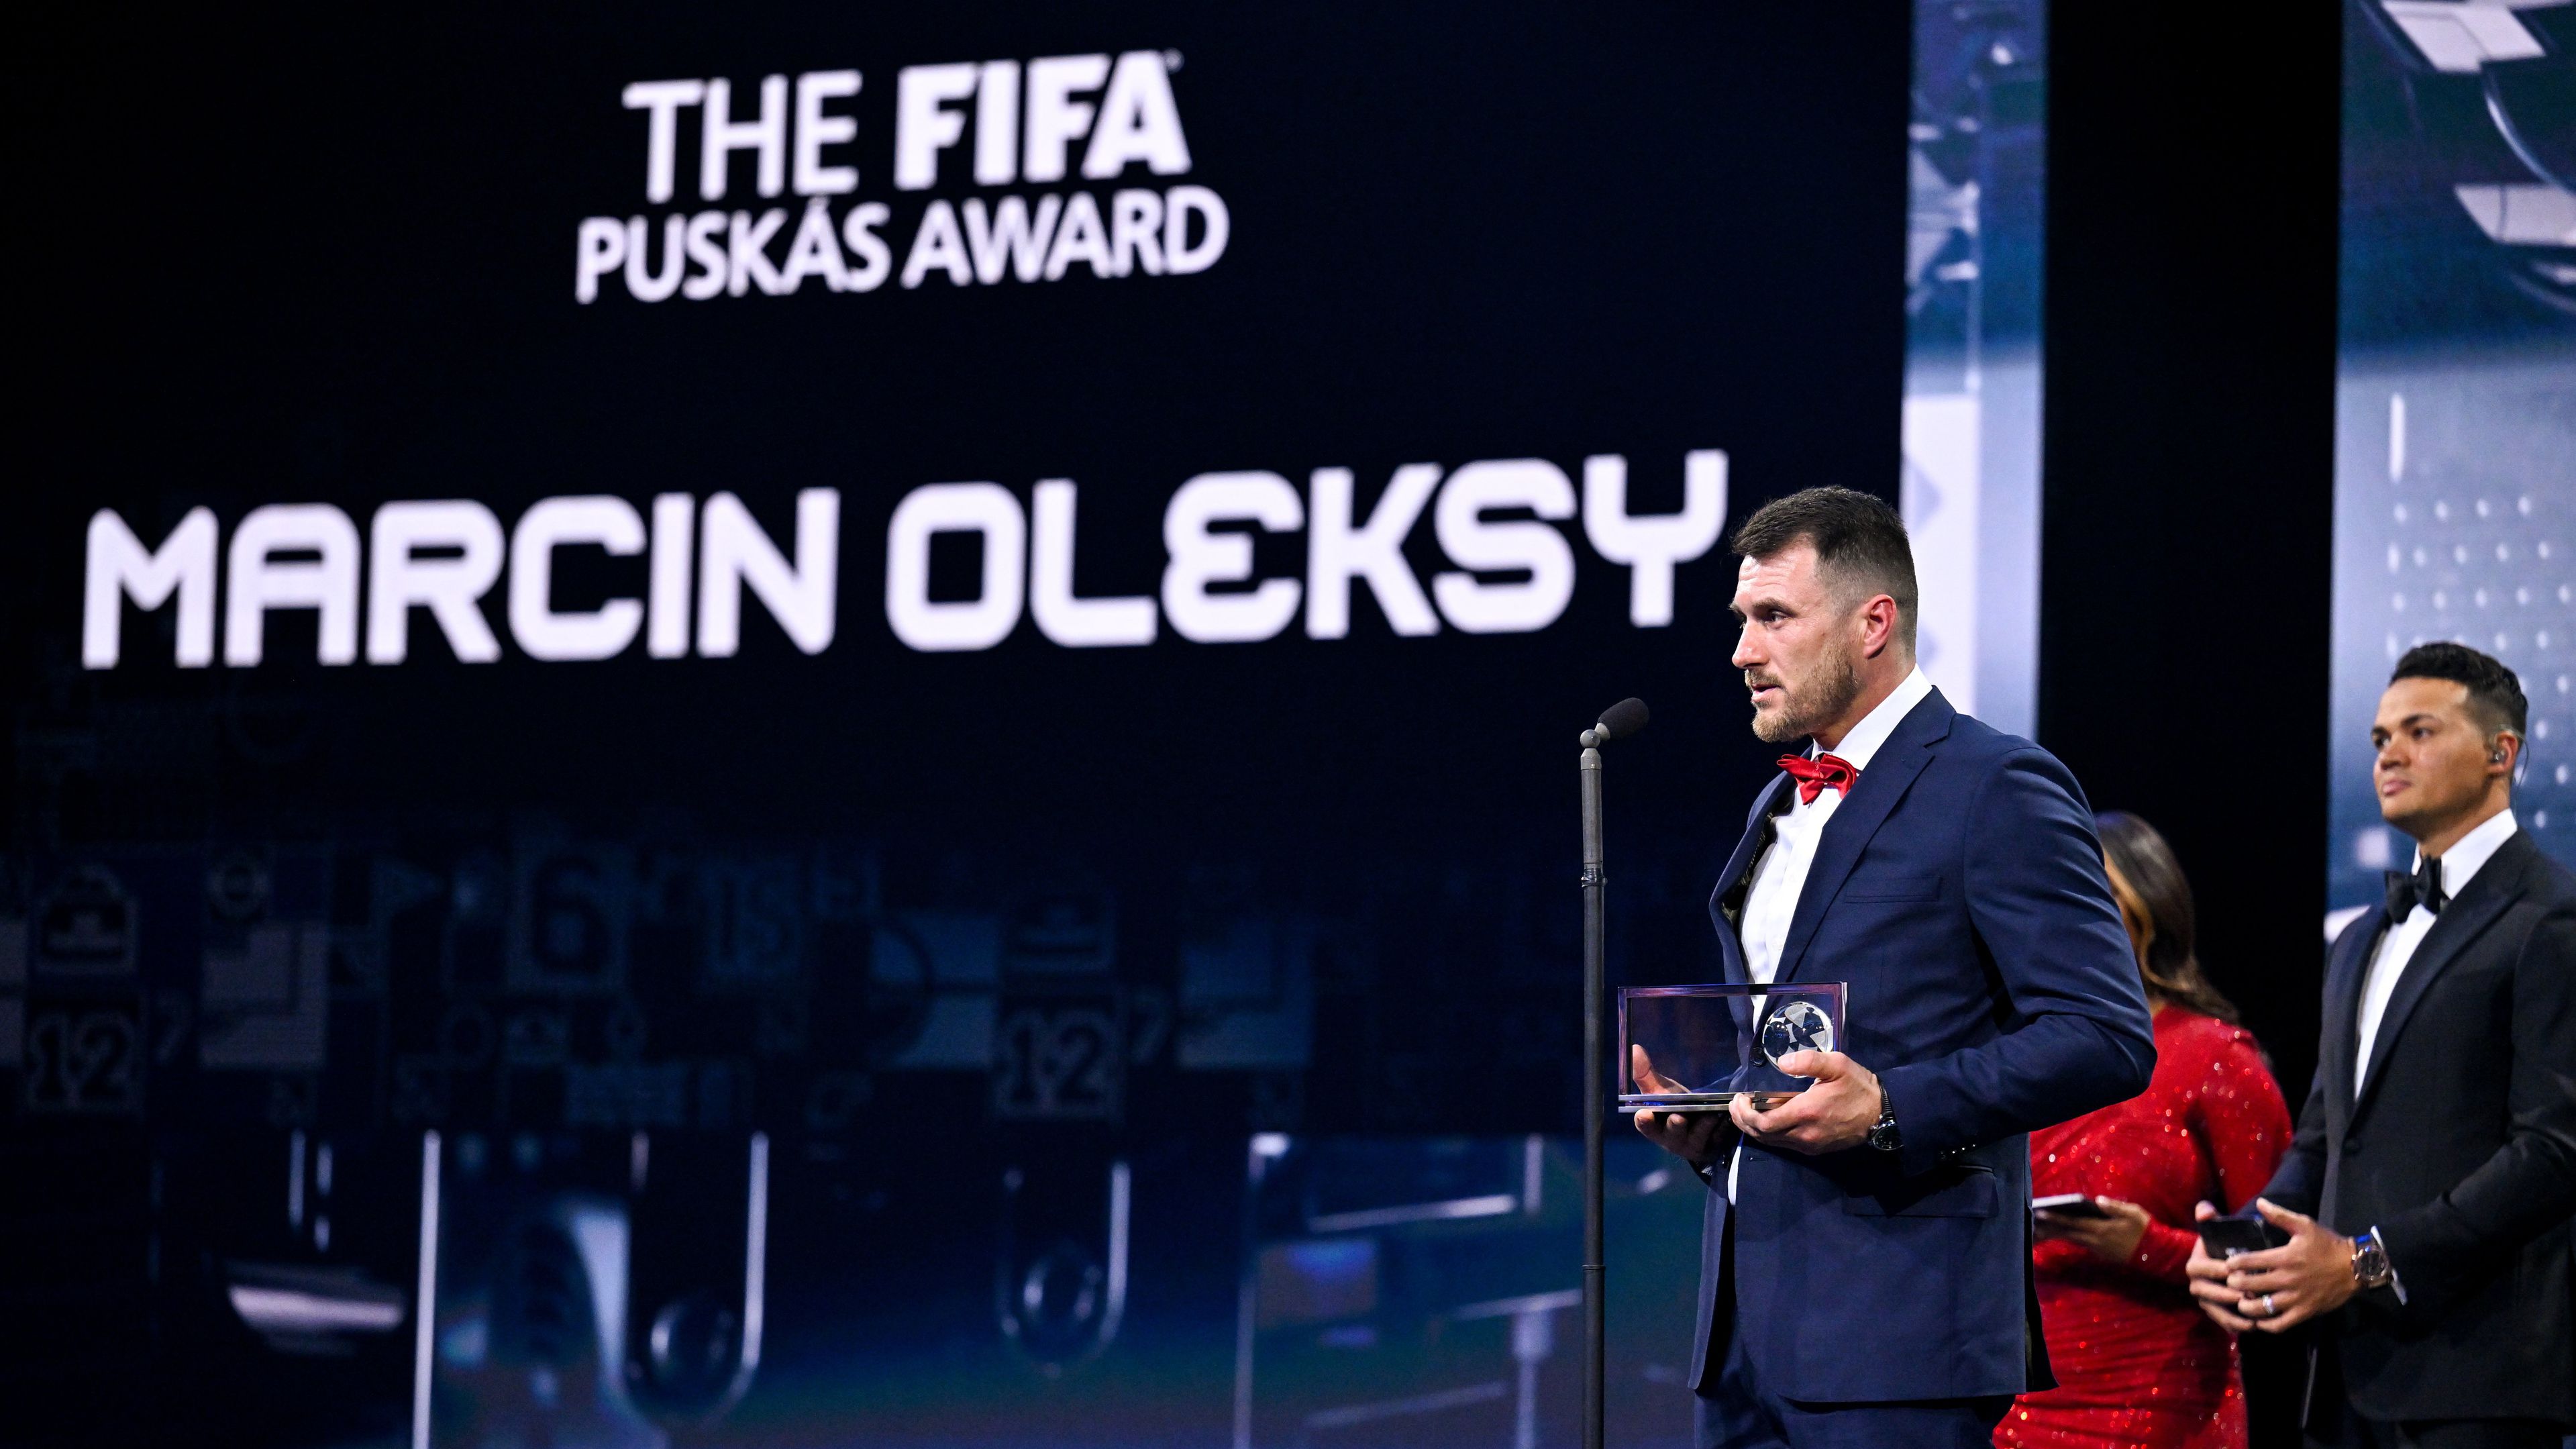 Tavaly Marcin Oleksy nyerte a díjat